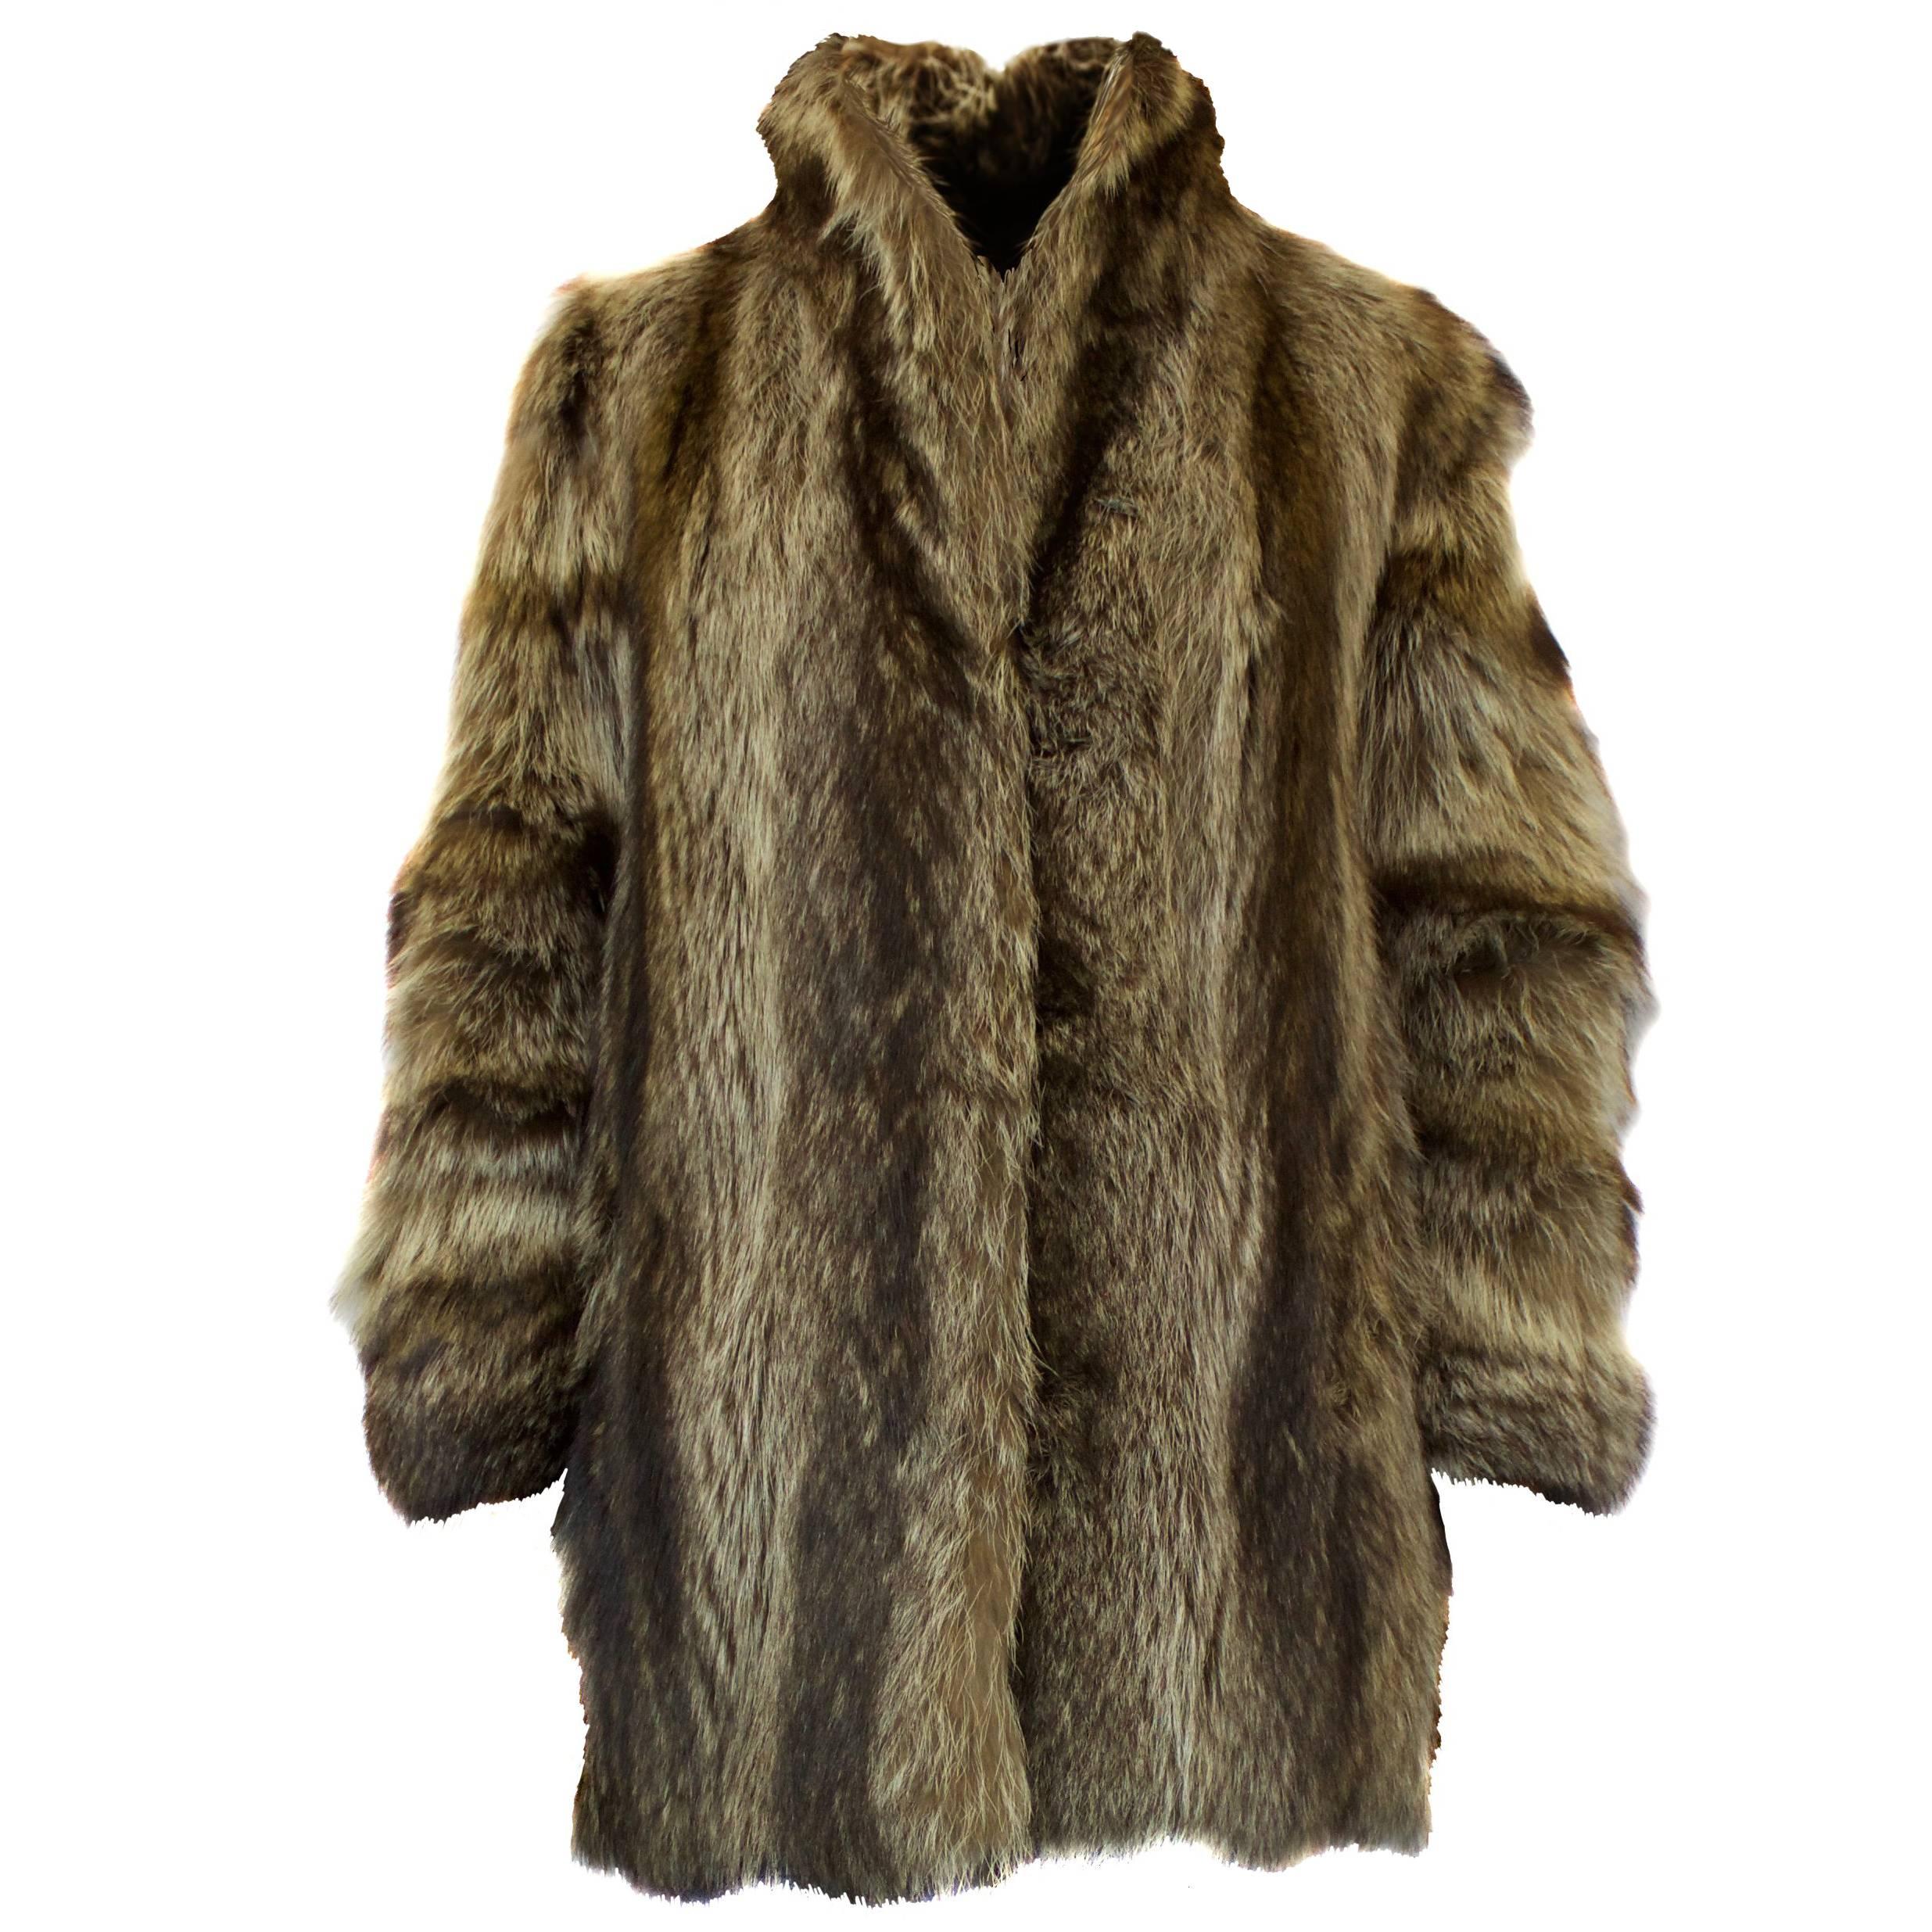 Yves Saint Laurent 1940s-inspired fur jacket. circa 1970 